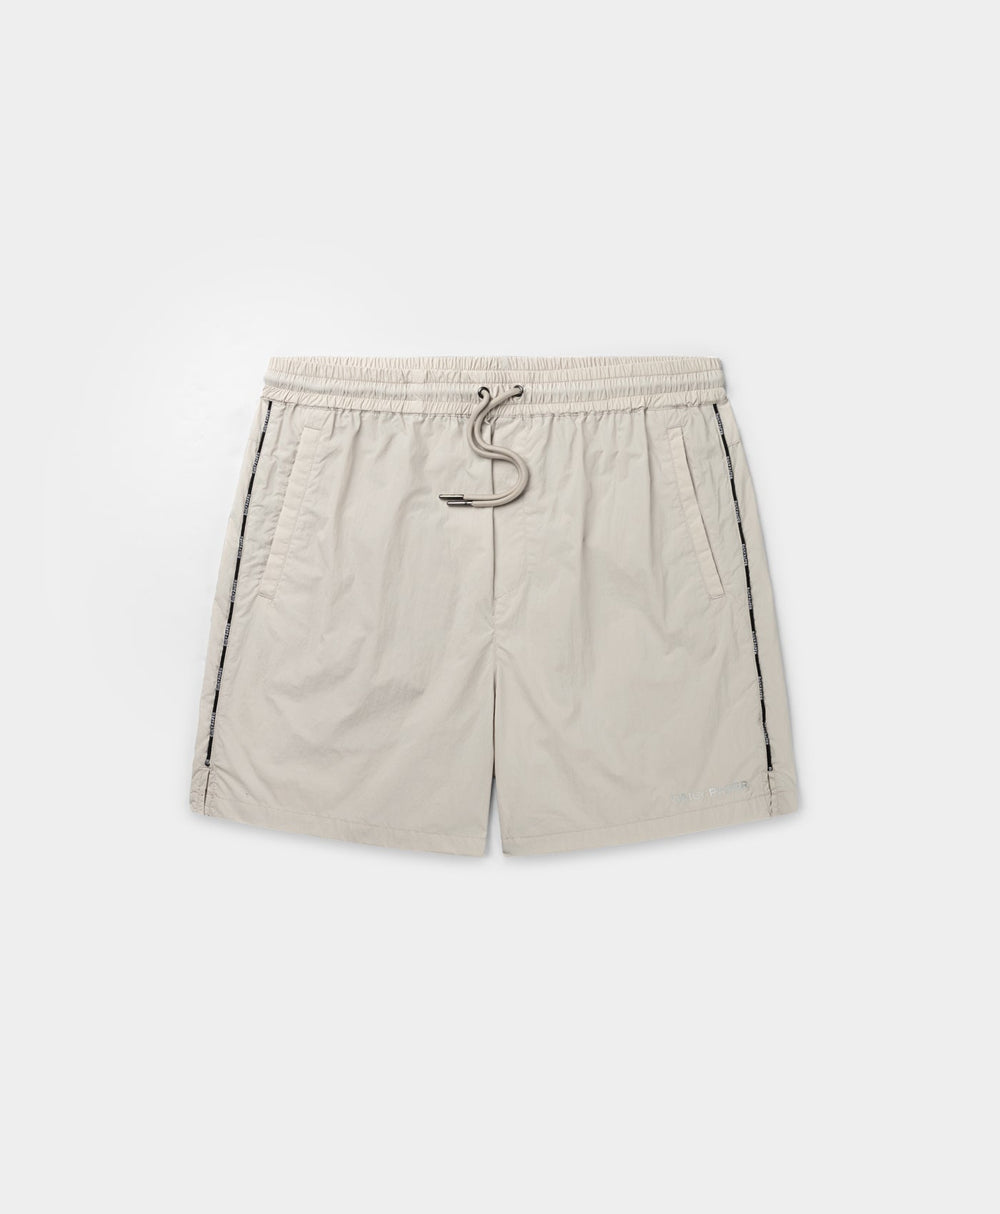 DP - Moonstruck Grey Mehani Shorts - Packshot - Front